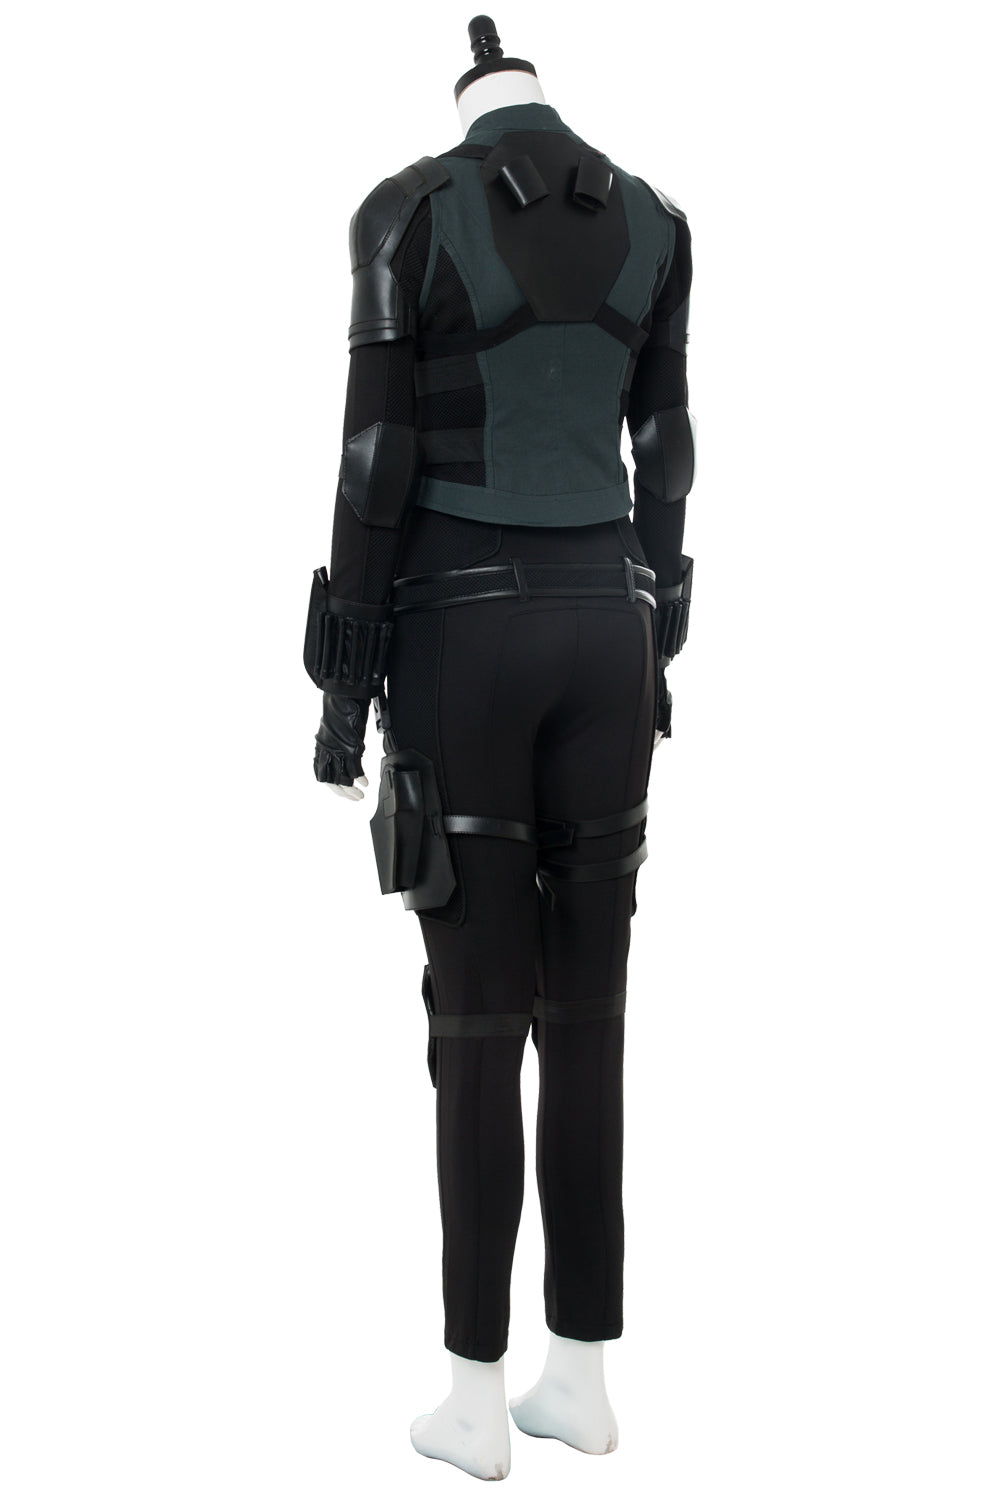 Avengers: Infinity War Natasha Romanoff alias Black Widow Cosplay Kostüm